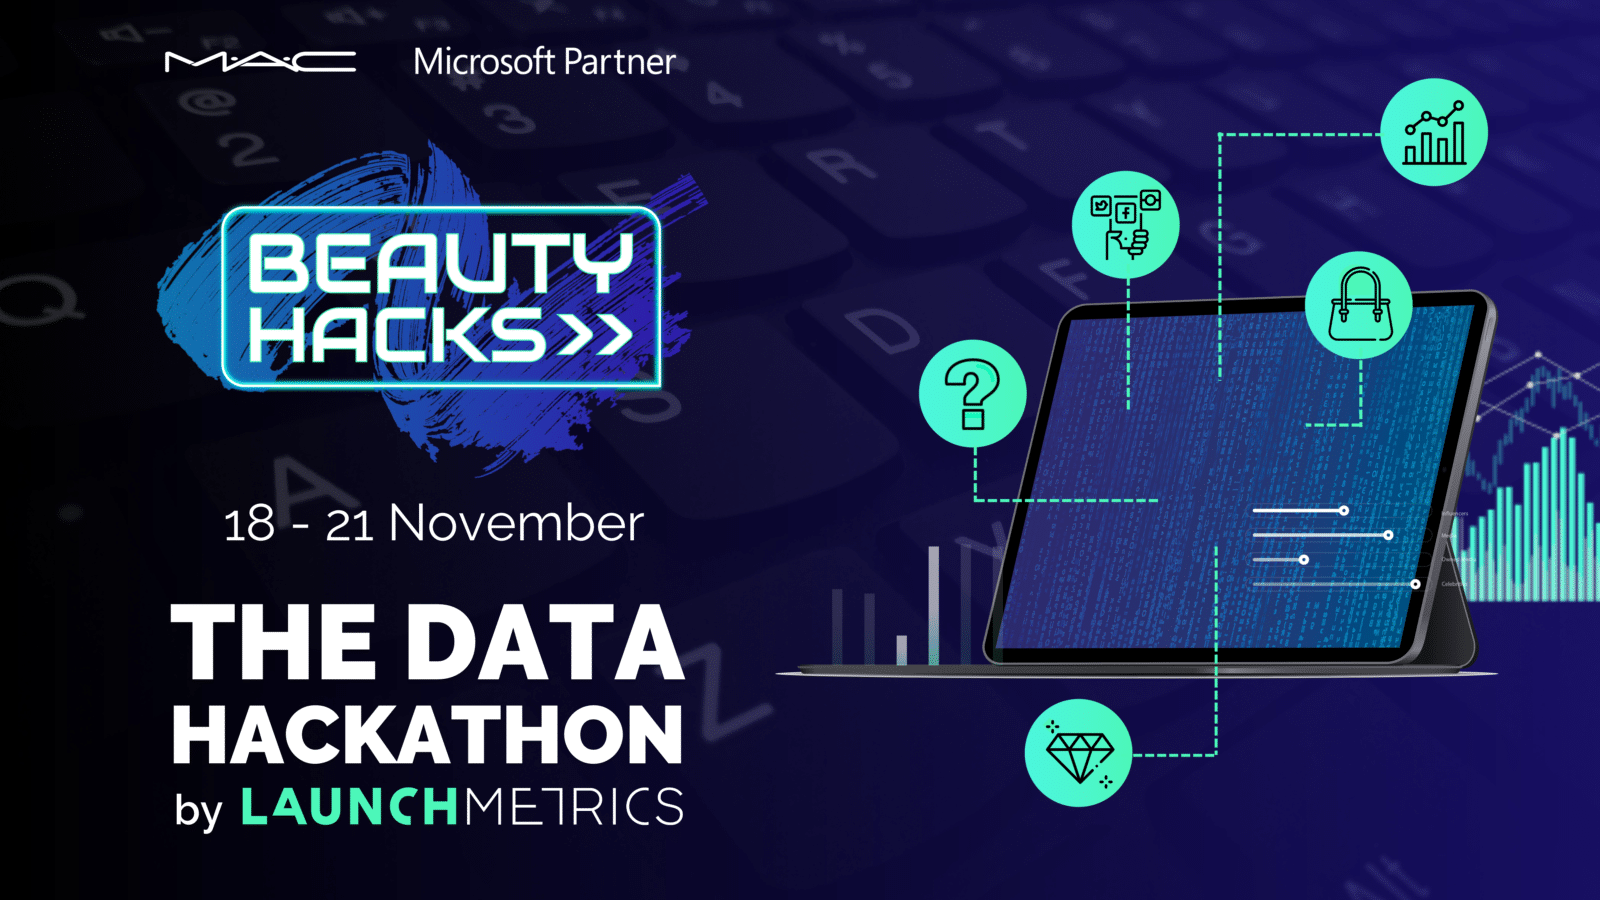 Data Hackathon by Launchmetrics